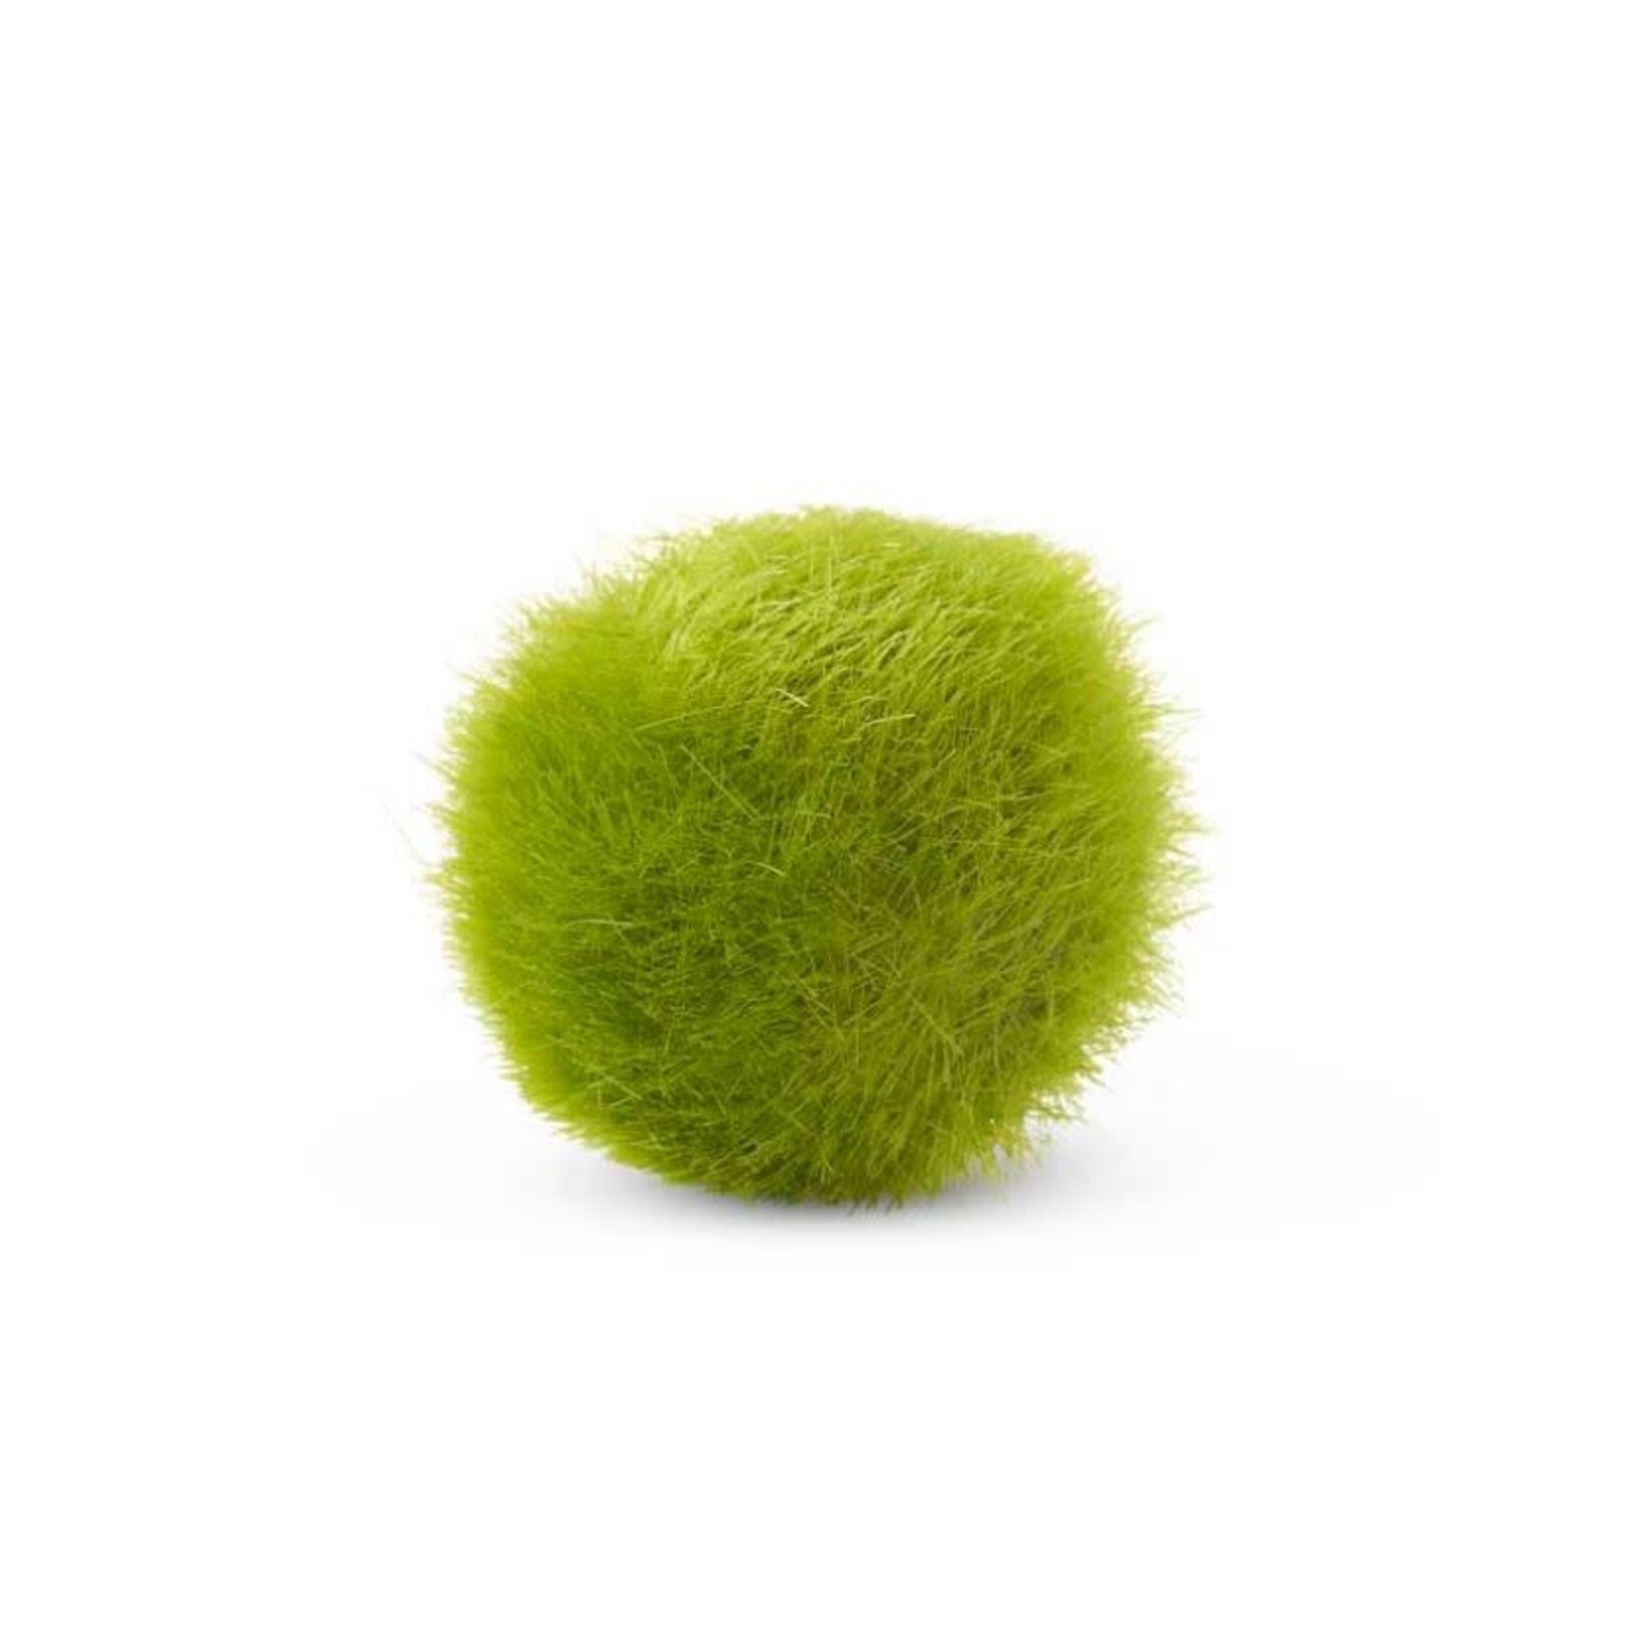 K & K Interiors, Inc. 2.5in Fuzzy Moss Ball